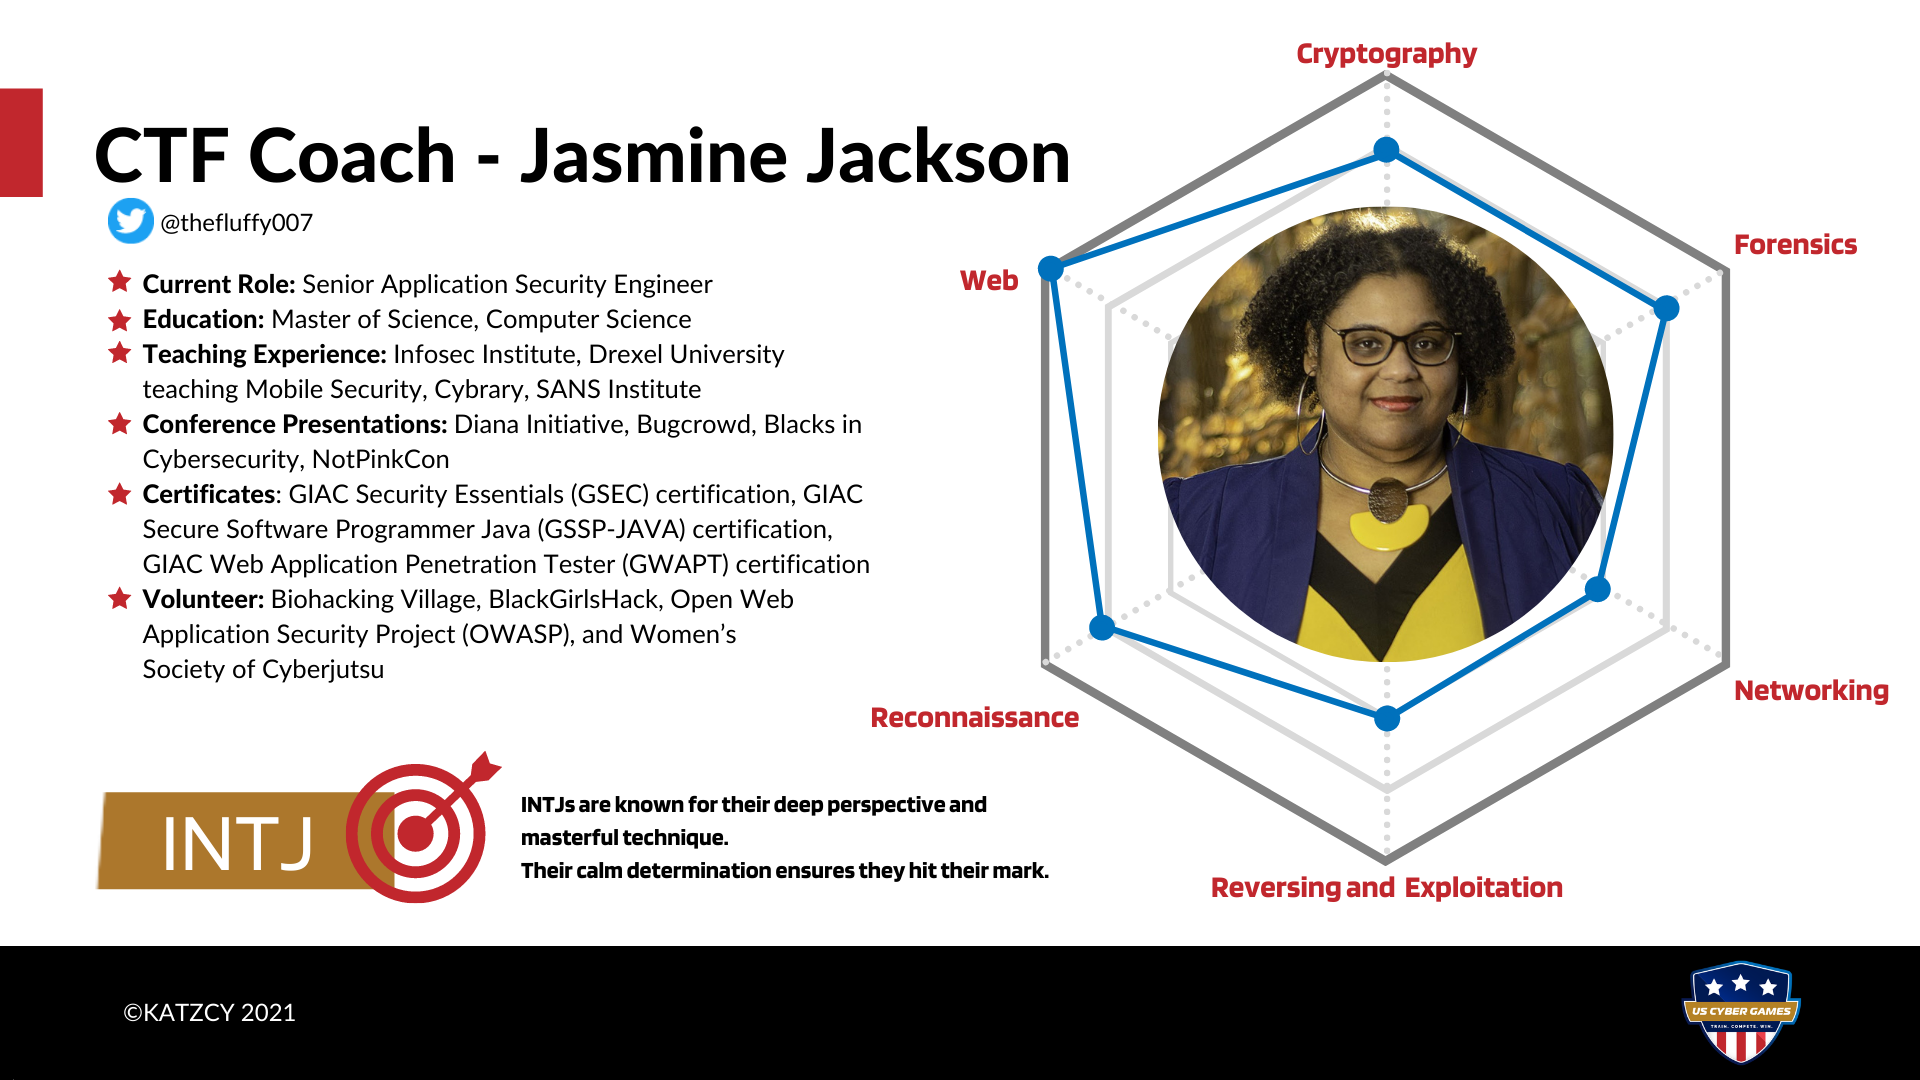 US Cyber Team CTF Coach Jasmine Jackson